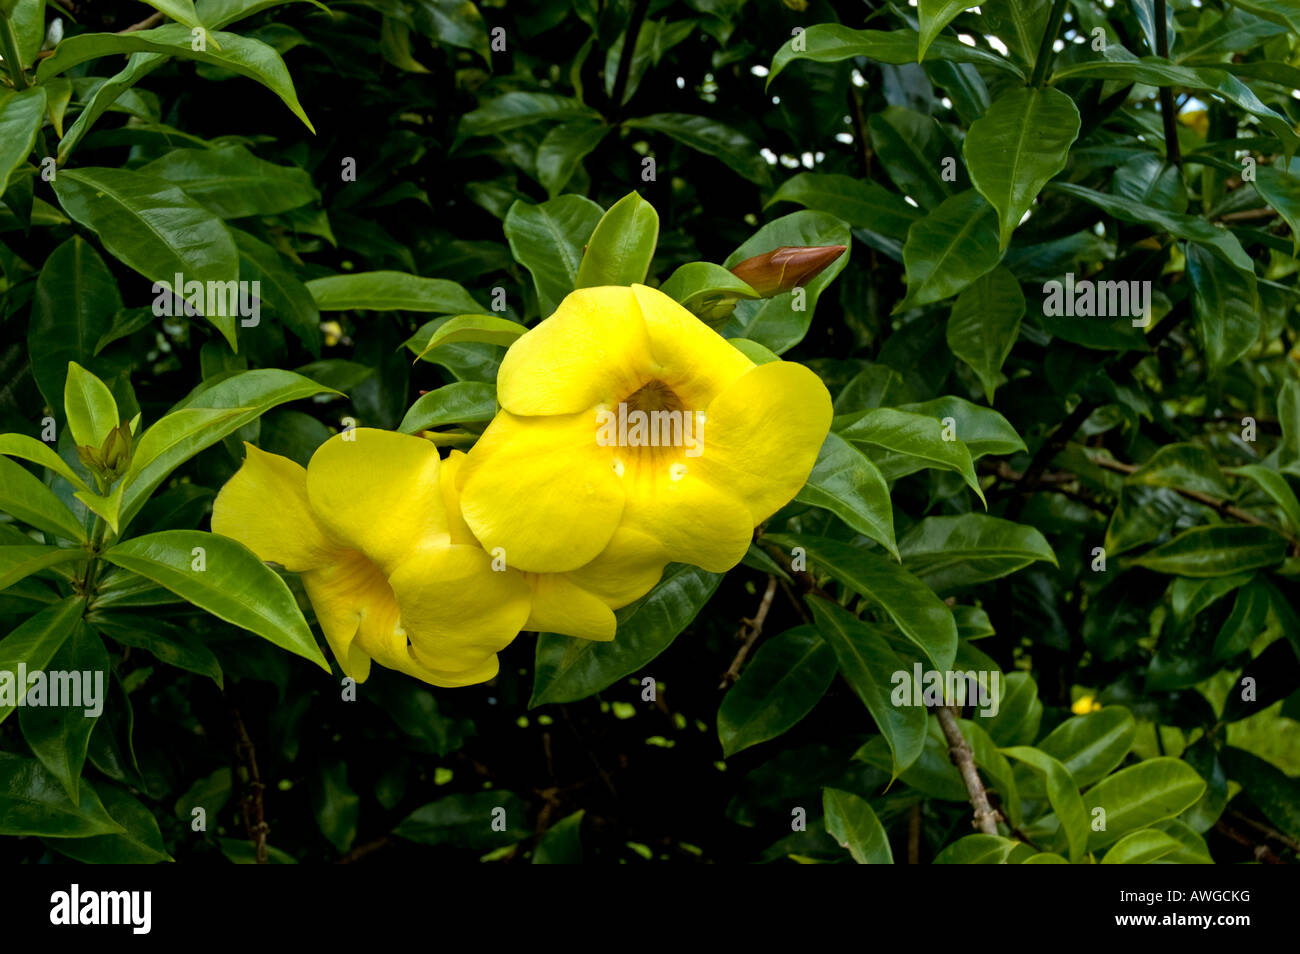 Allamanda Flower, Grenada Stock Photo